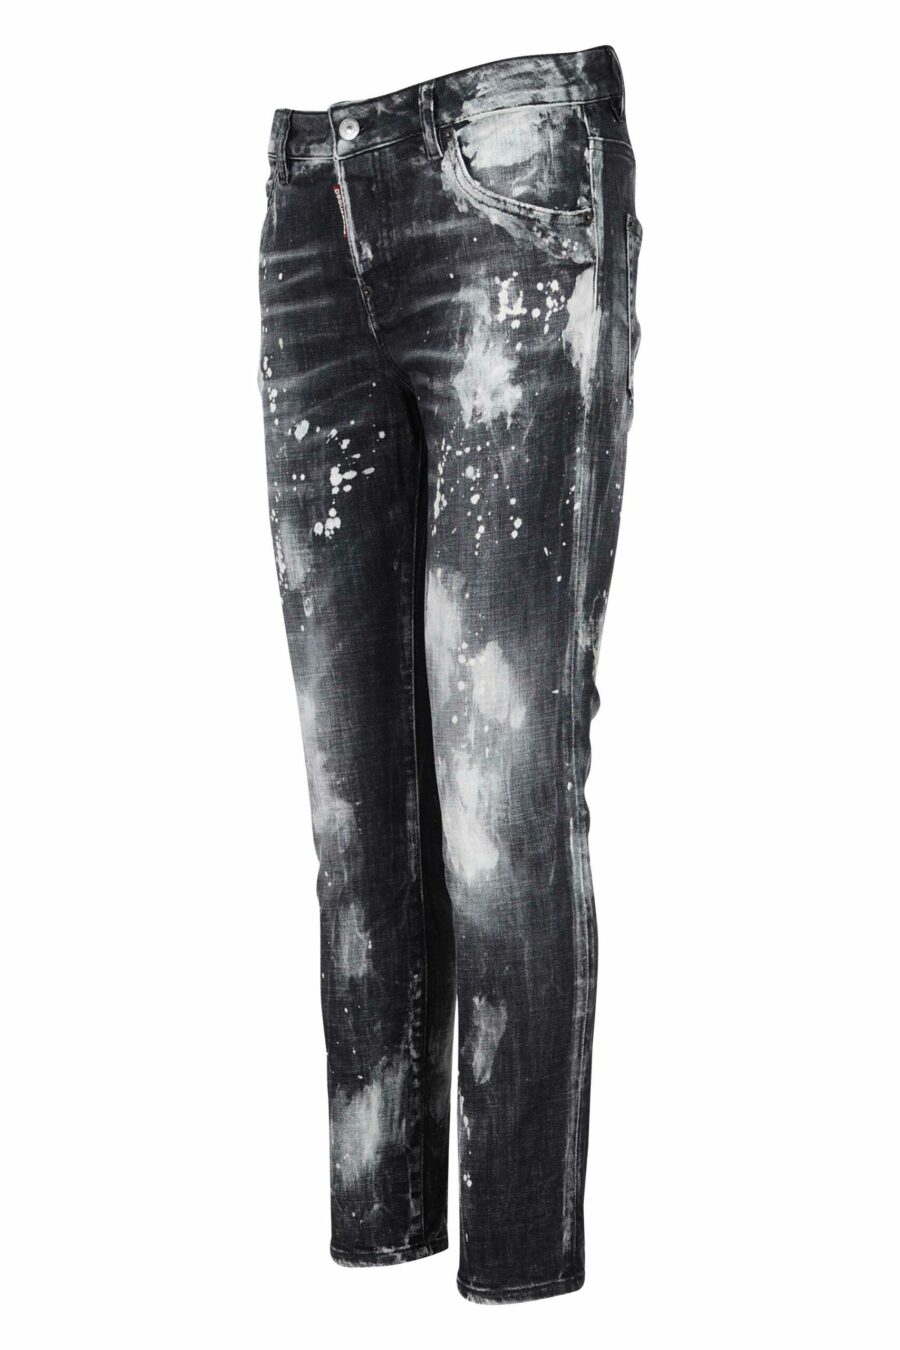 Cool girl jean pants "cool girl jean" schwarz in Flecken getragen - 8054148118112 1 skaliert